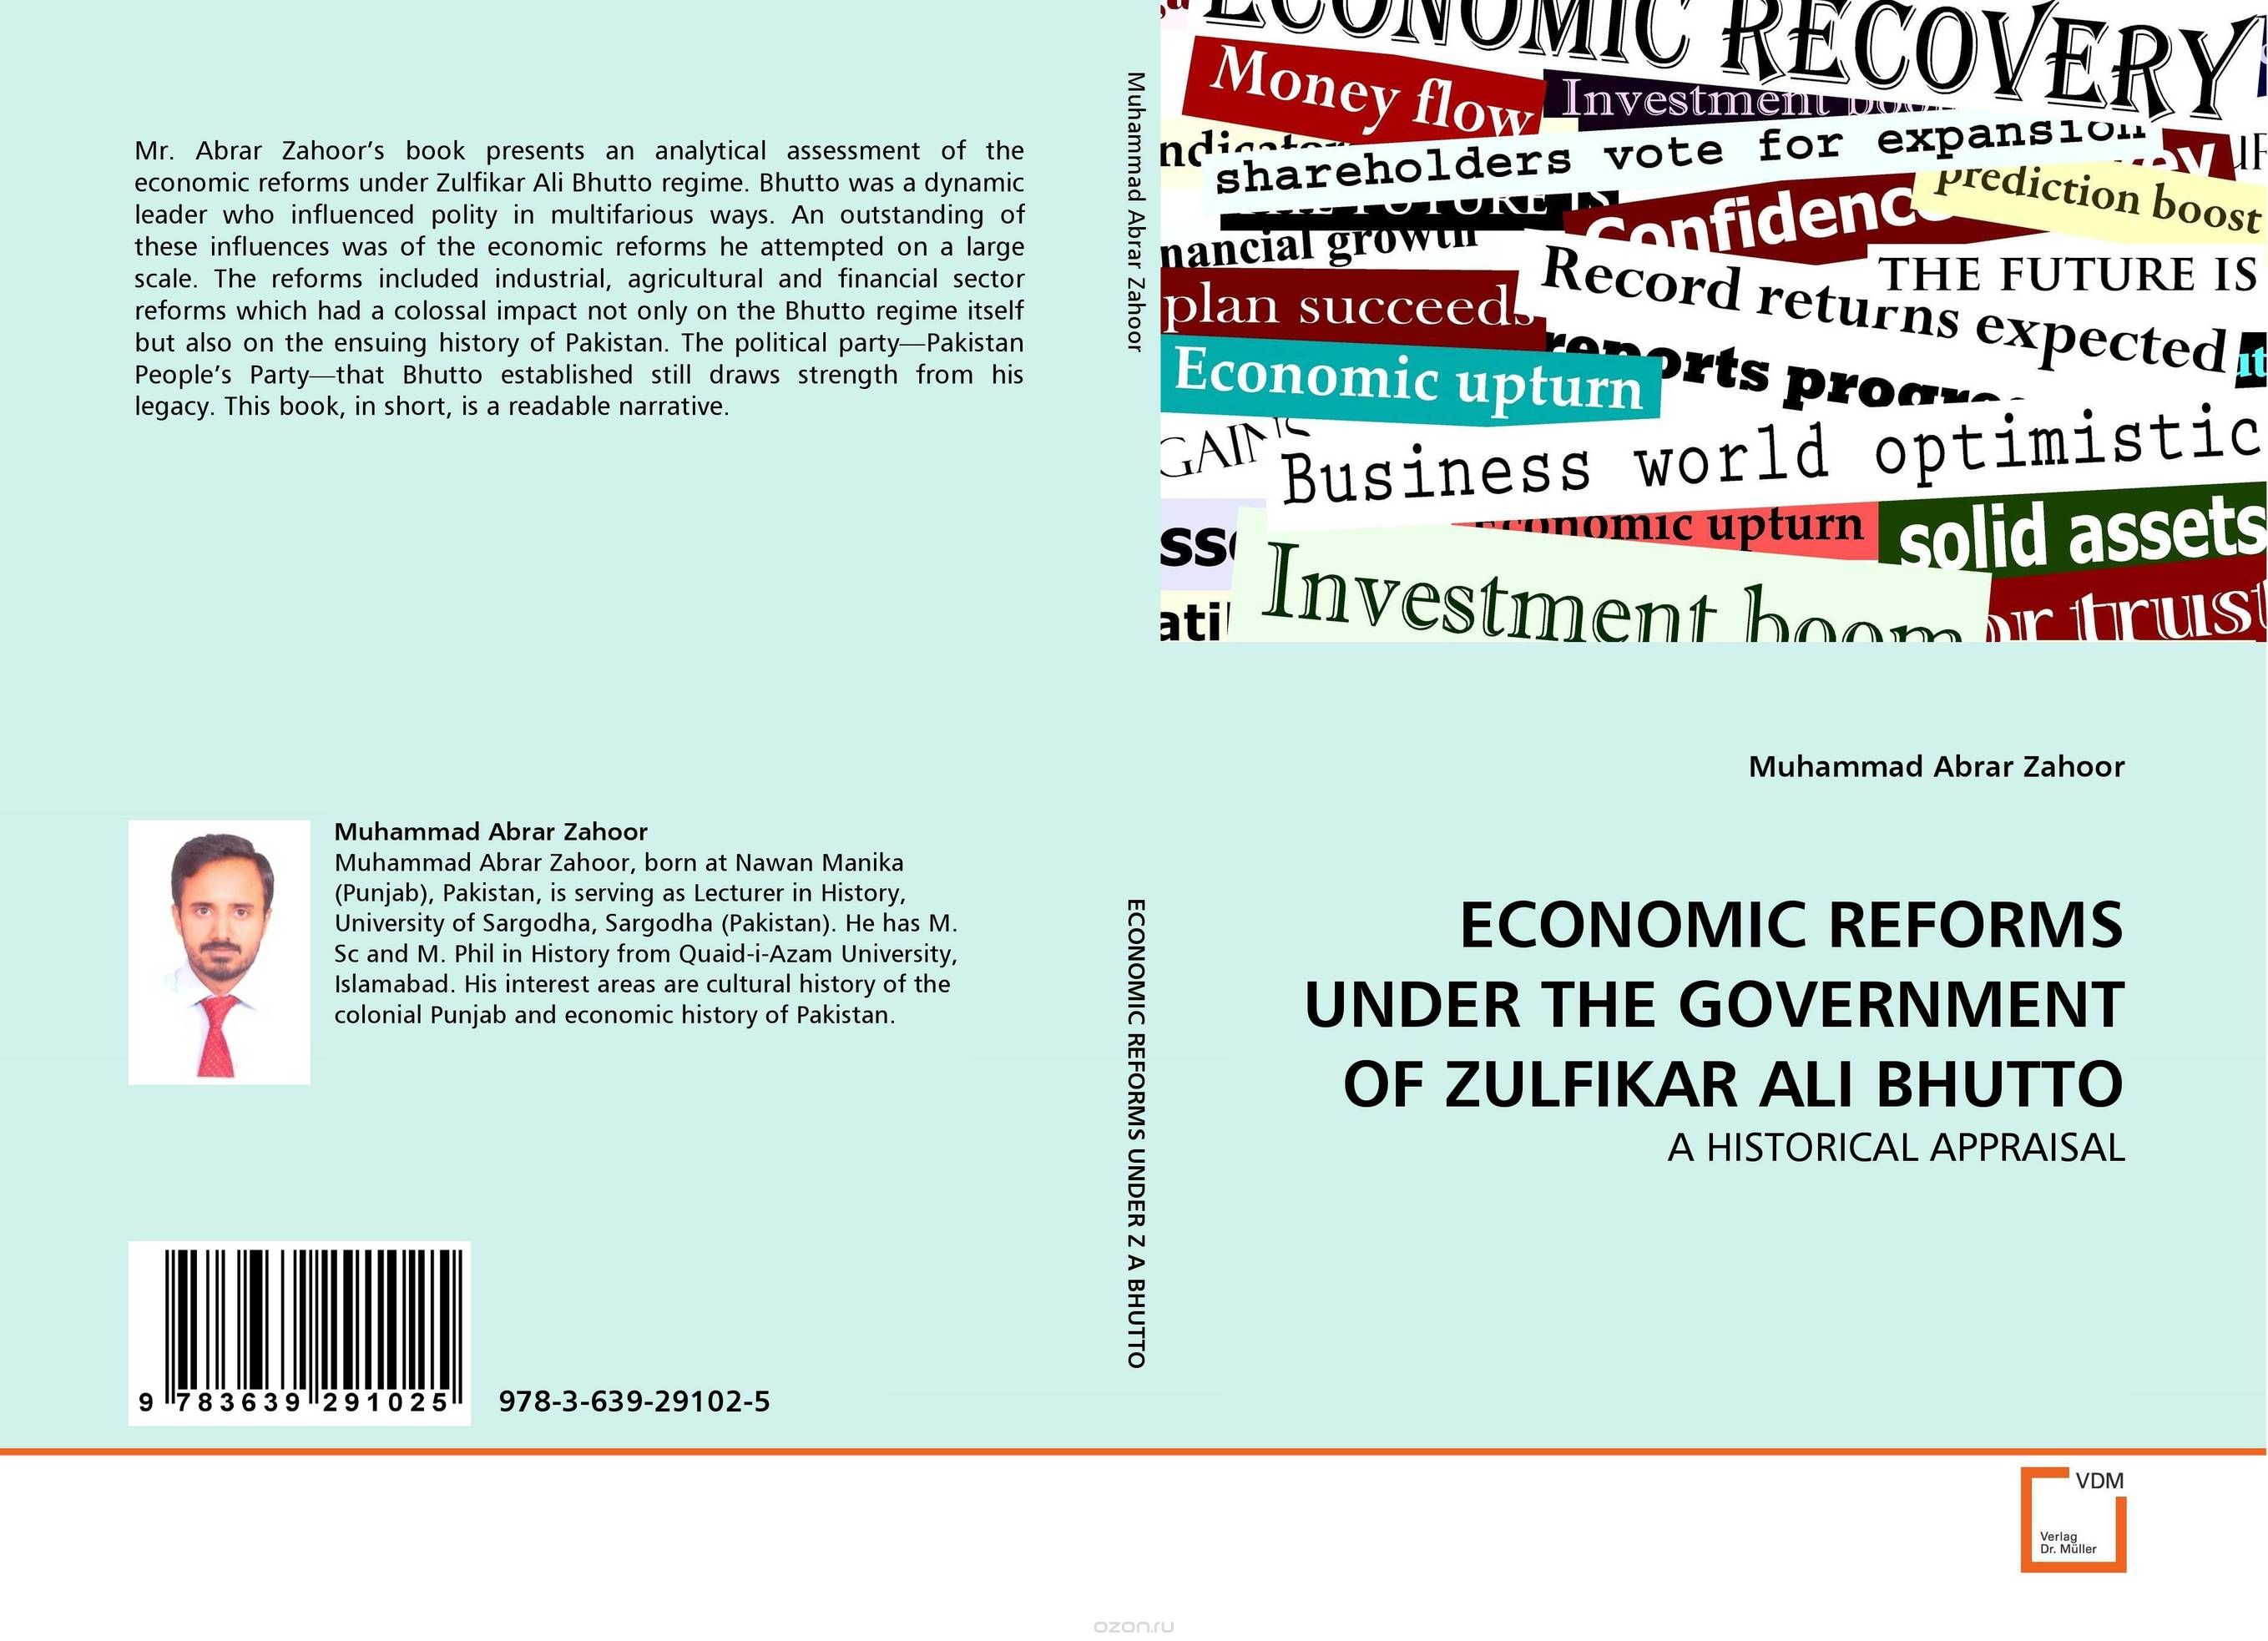 Скачать книгу "ECONOMIC REFORMS UNDER THE GOVERNMENT OF ZULFIKAR ALI BHUTTO"